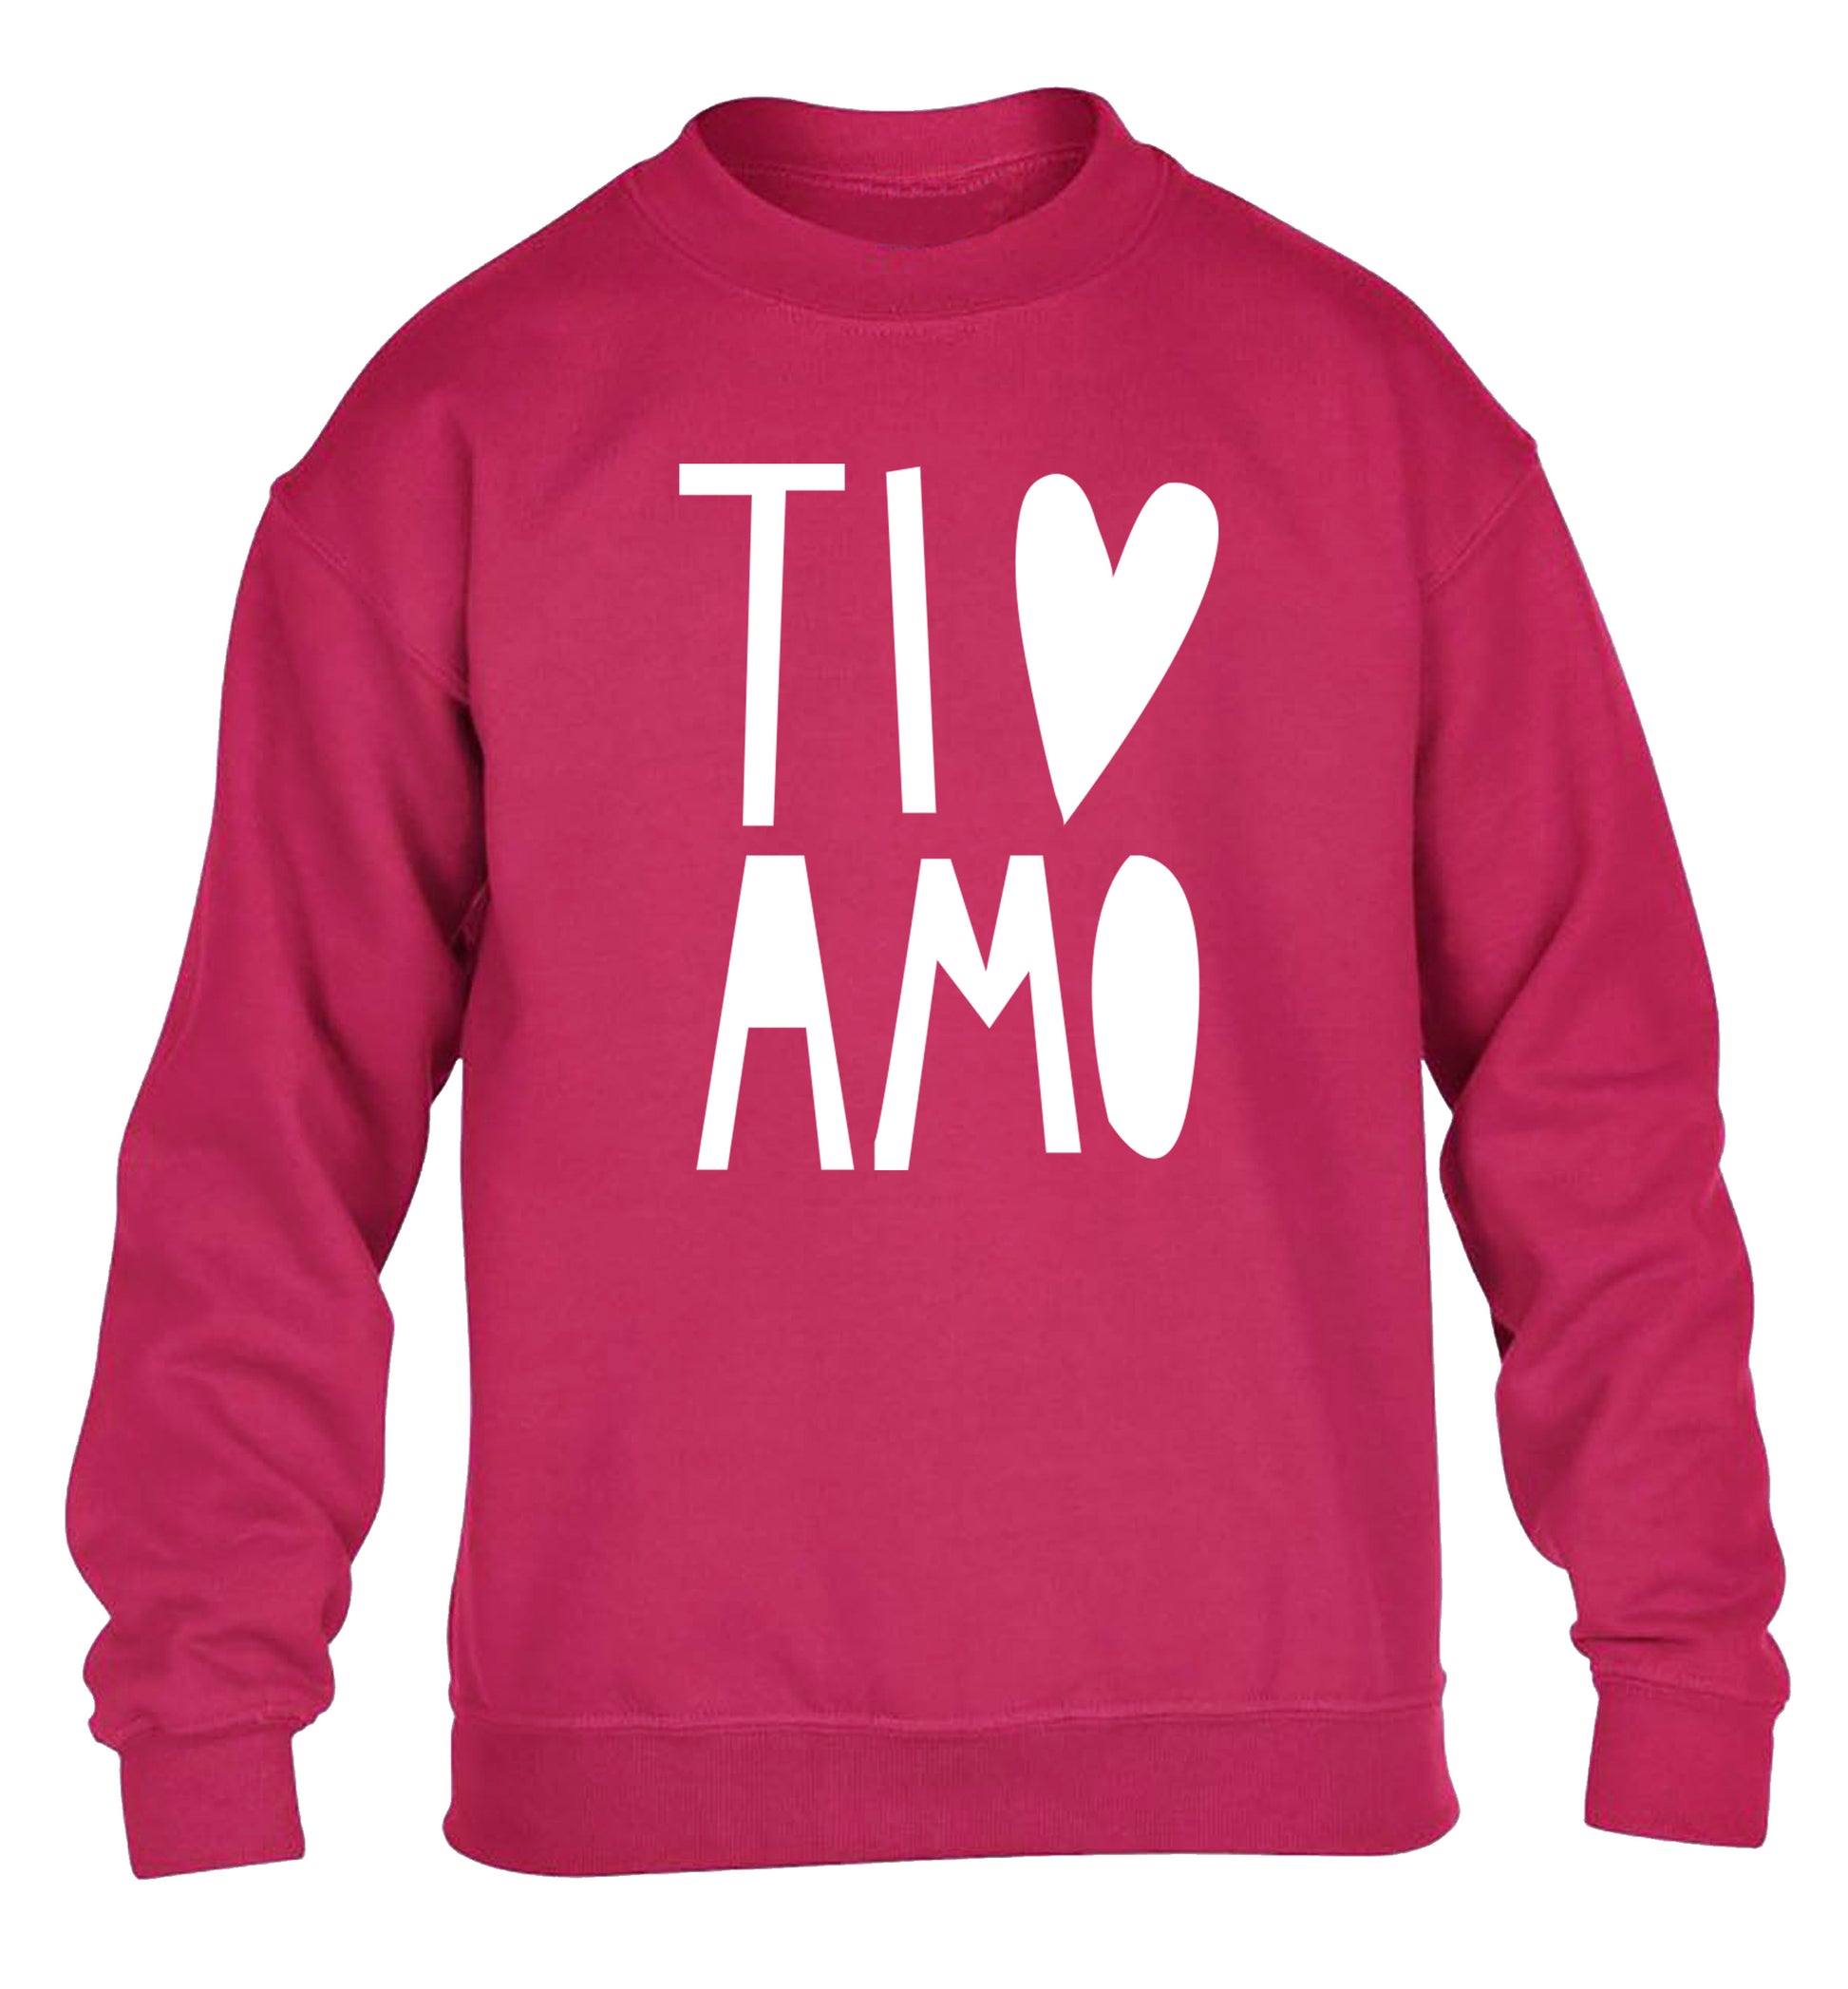 Ti amo - I love you children's pink sweater 12-13 Years